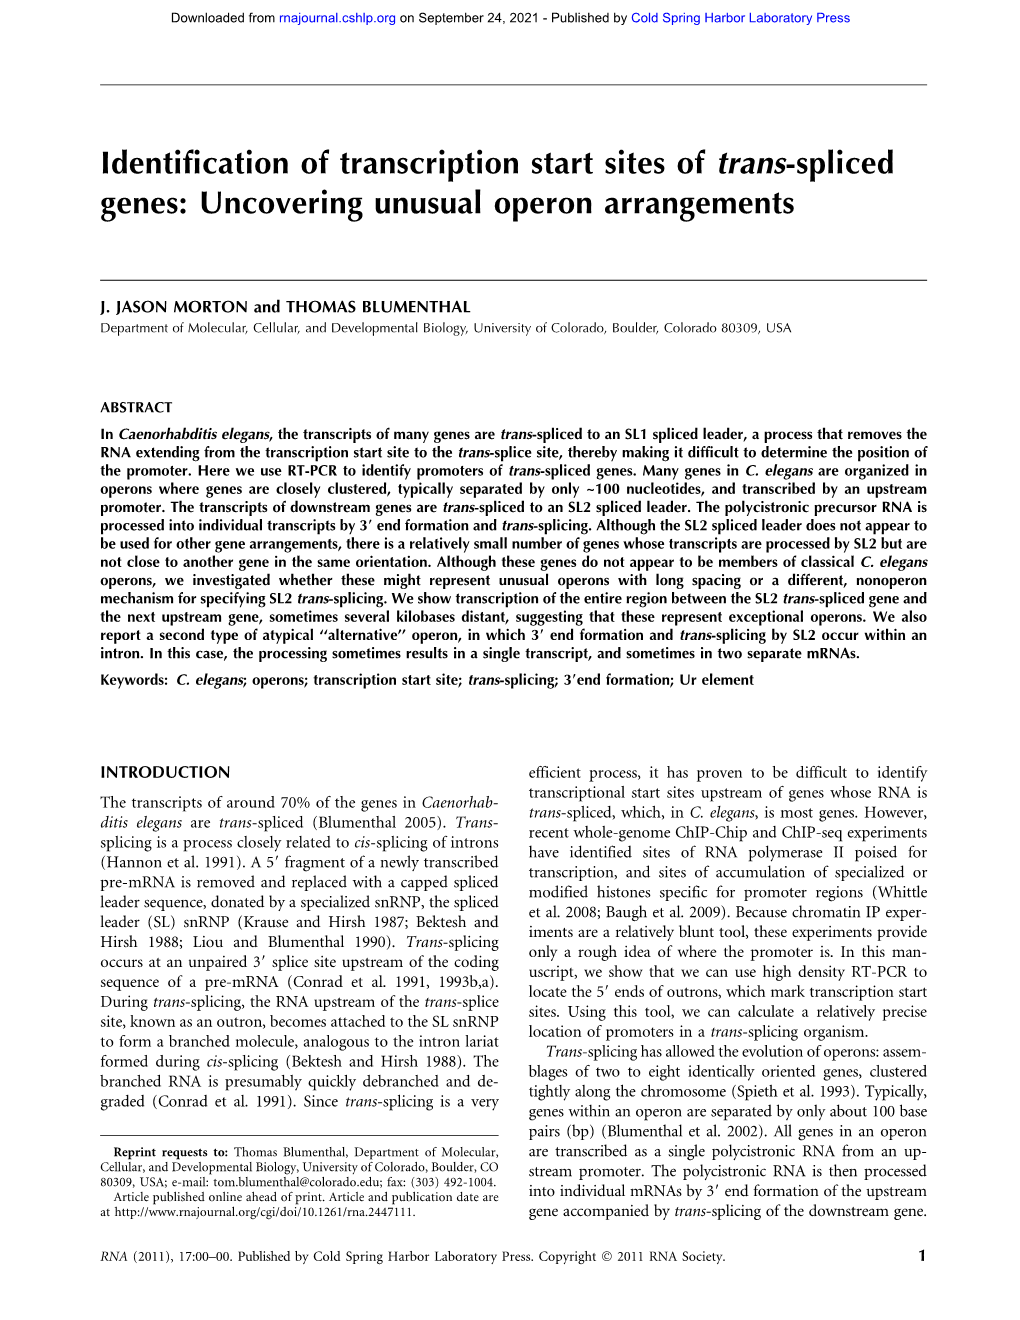 Identification of Transcription Start Sites of Trans-Spliced Genes: Uncovering Unusual Operon Arrangements